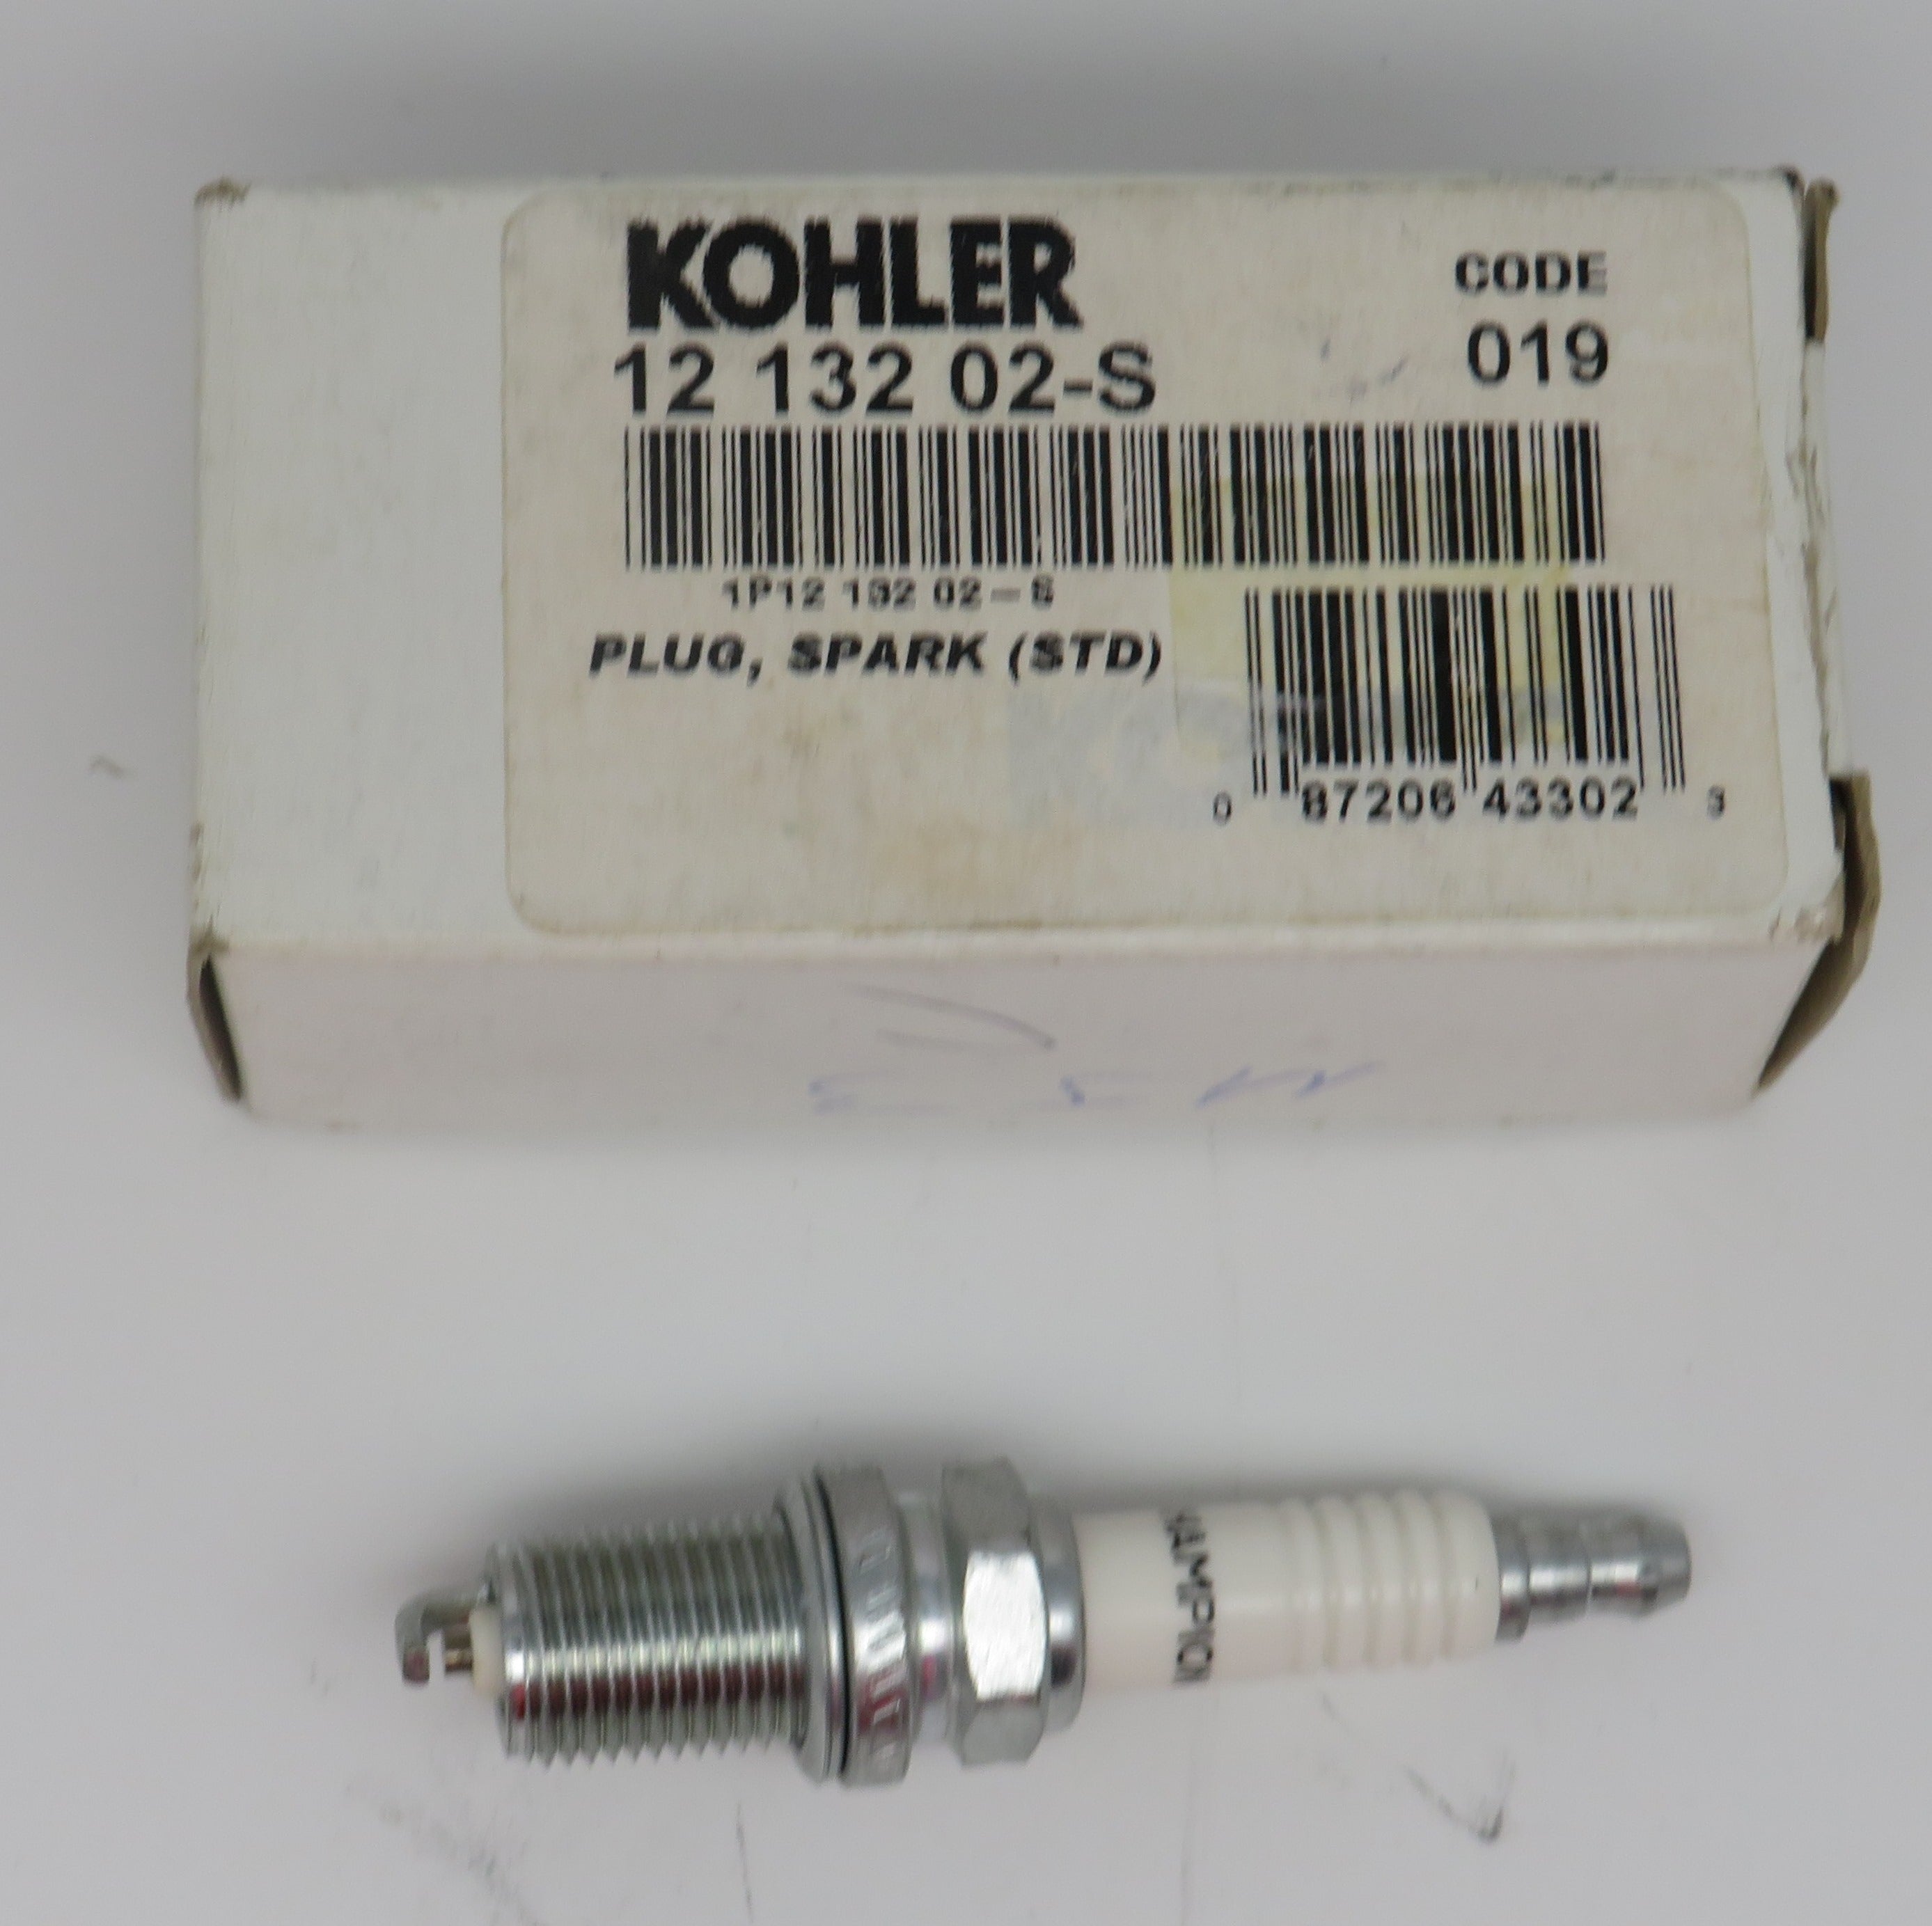 1213202-S Kohler Spark Plug